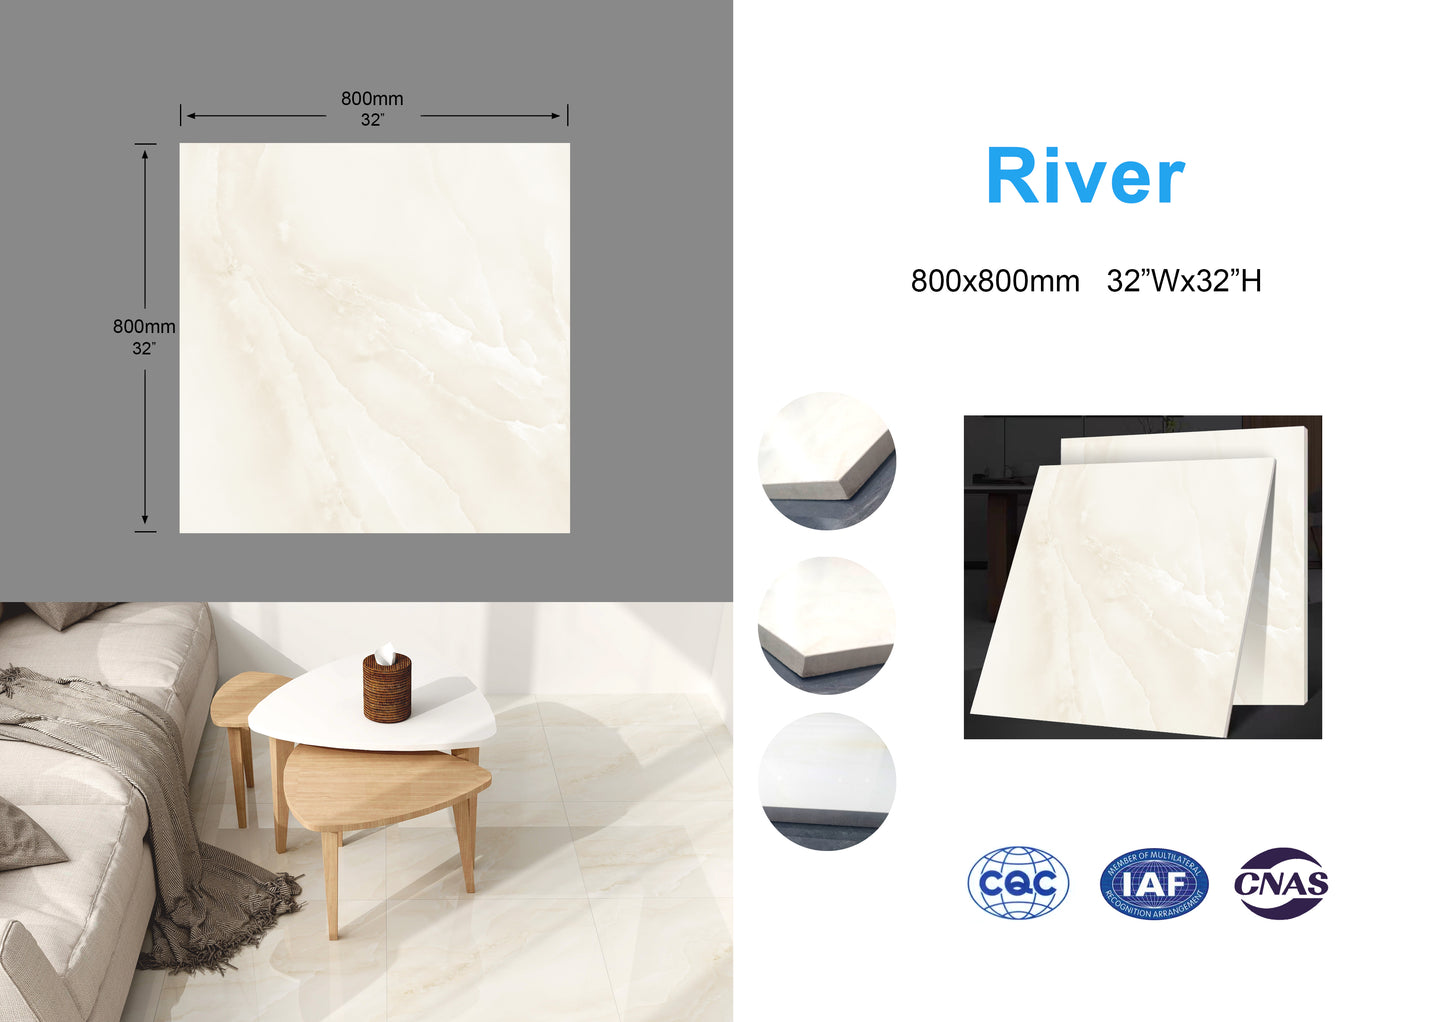 River family Full Polished Glazed Tile 32"x32" 3pcs/box 21.33sf/box $1.69/sf (15 days return/exchange) Bulk Deal 1000sf+ $1.59/SF(No return/no exchange)